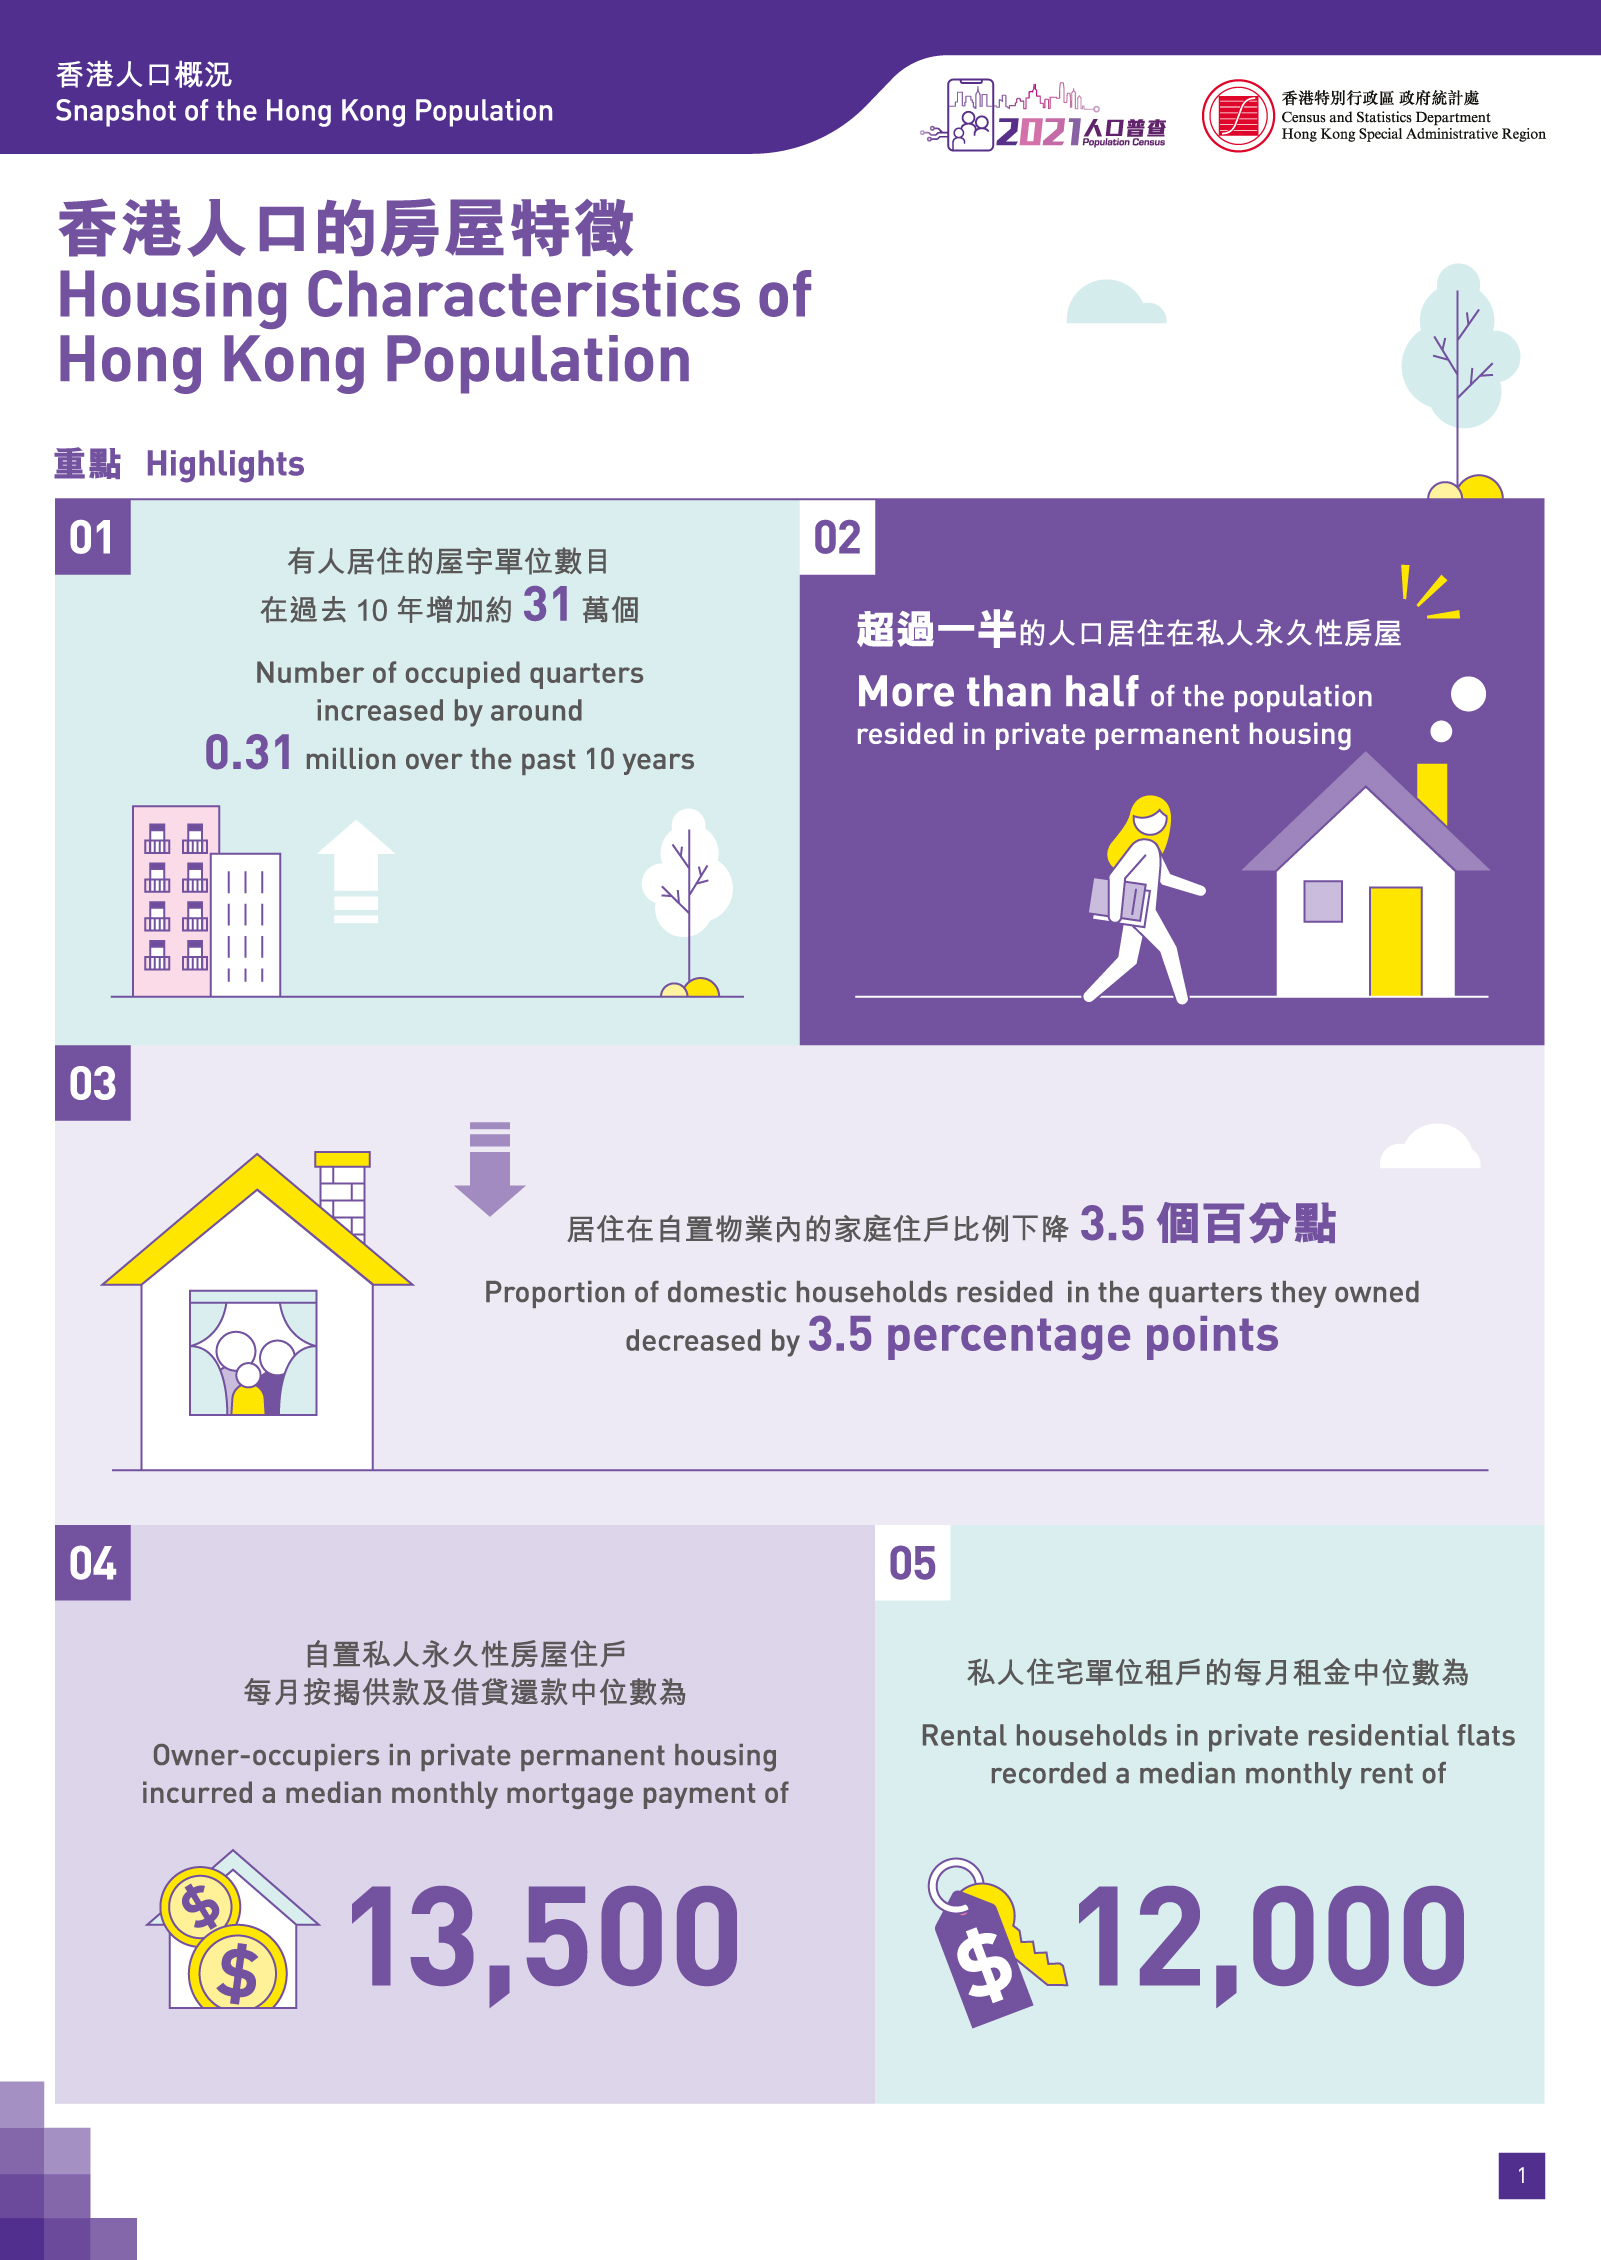 Housing Characteristics of Hong Kong Population